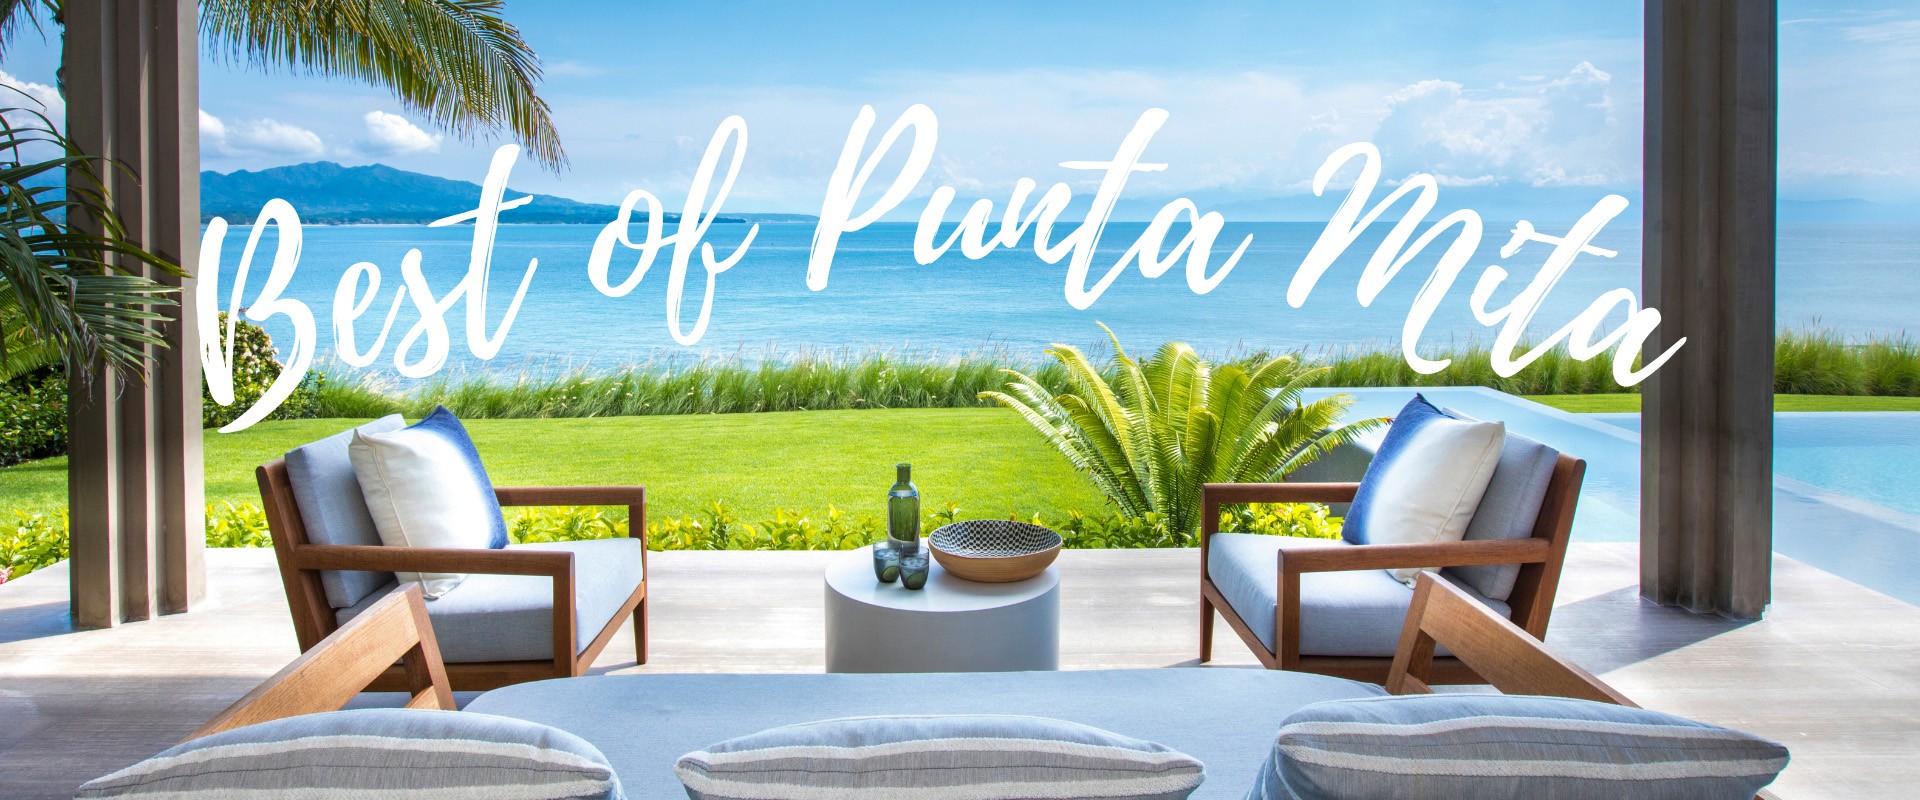 Best of Punta Mita Guide